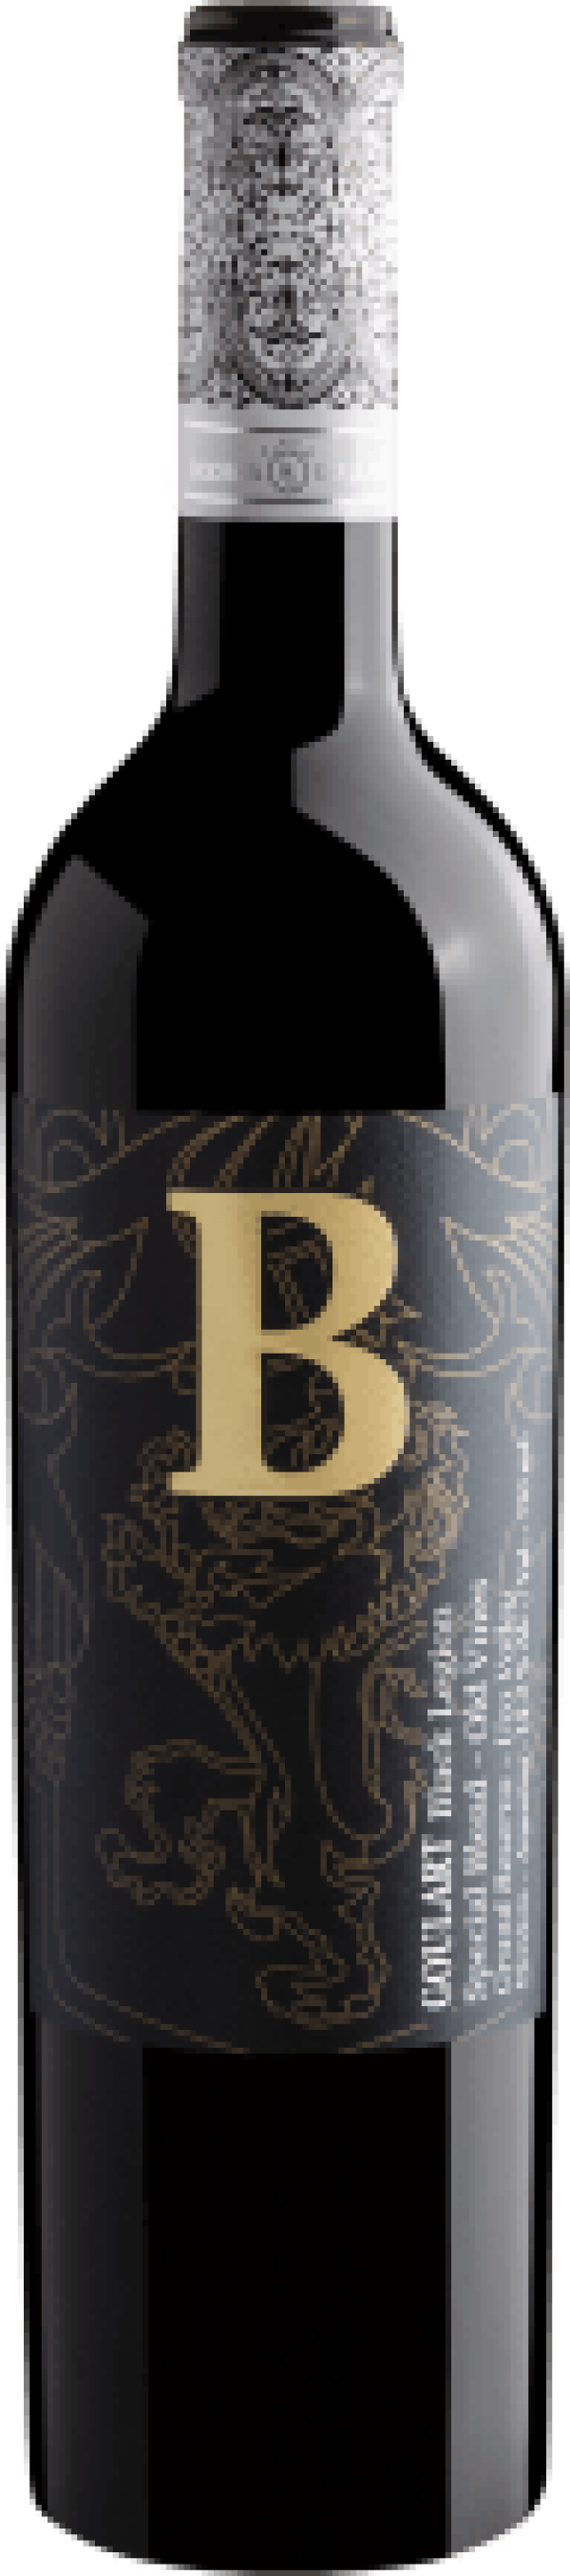 Goulart B Black Legion Special Blend Old Vines 2019